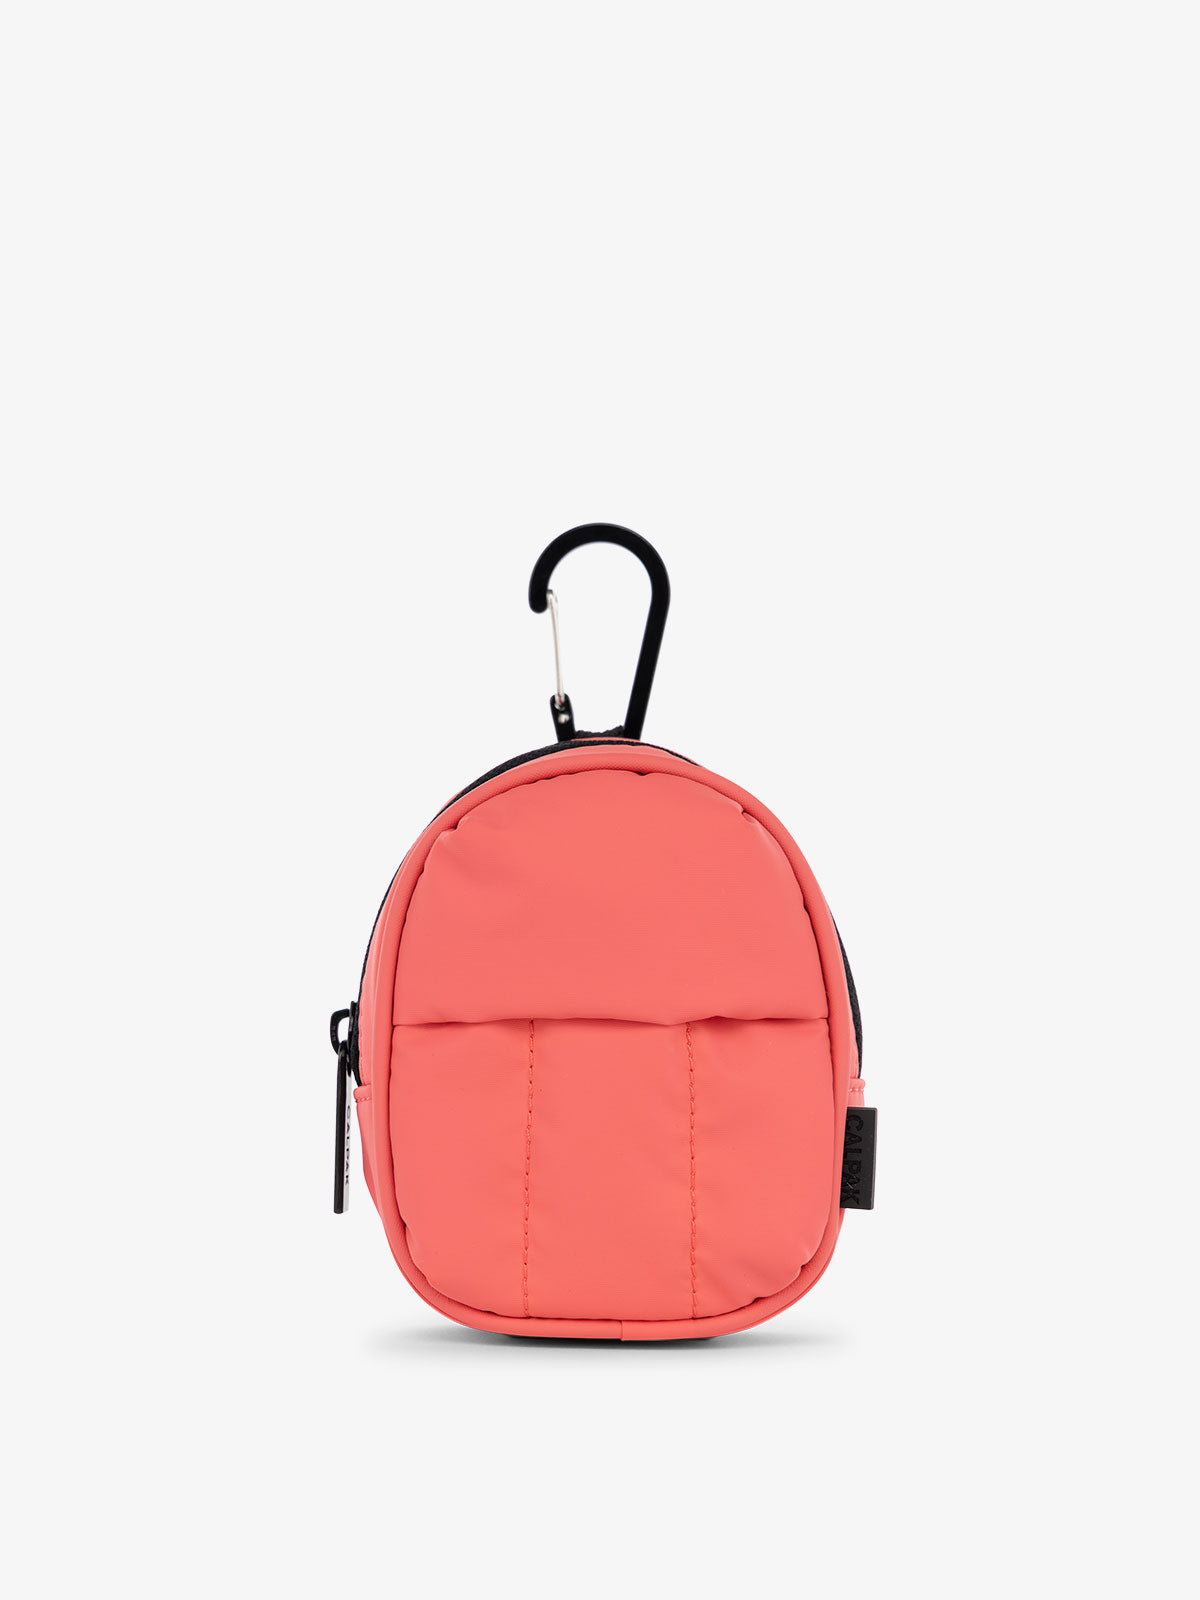 CALPAK Luka key pouch with carabiner clip in watermelon